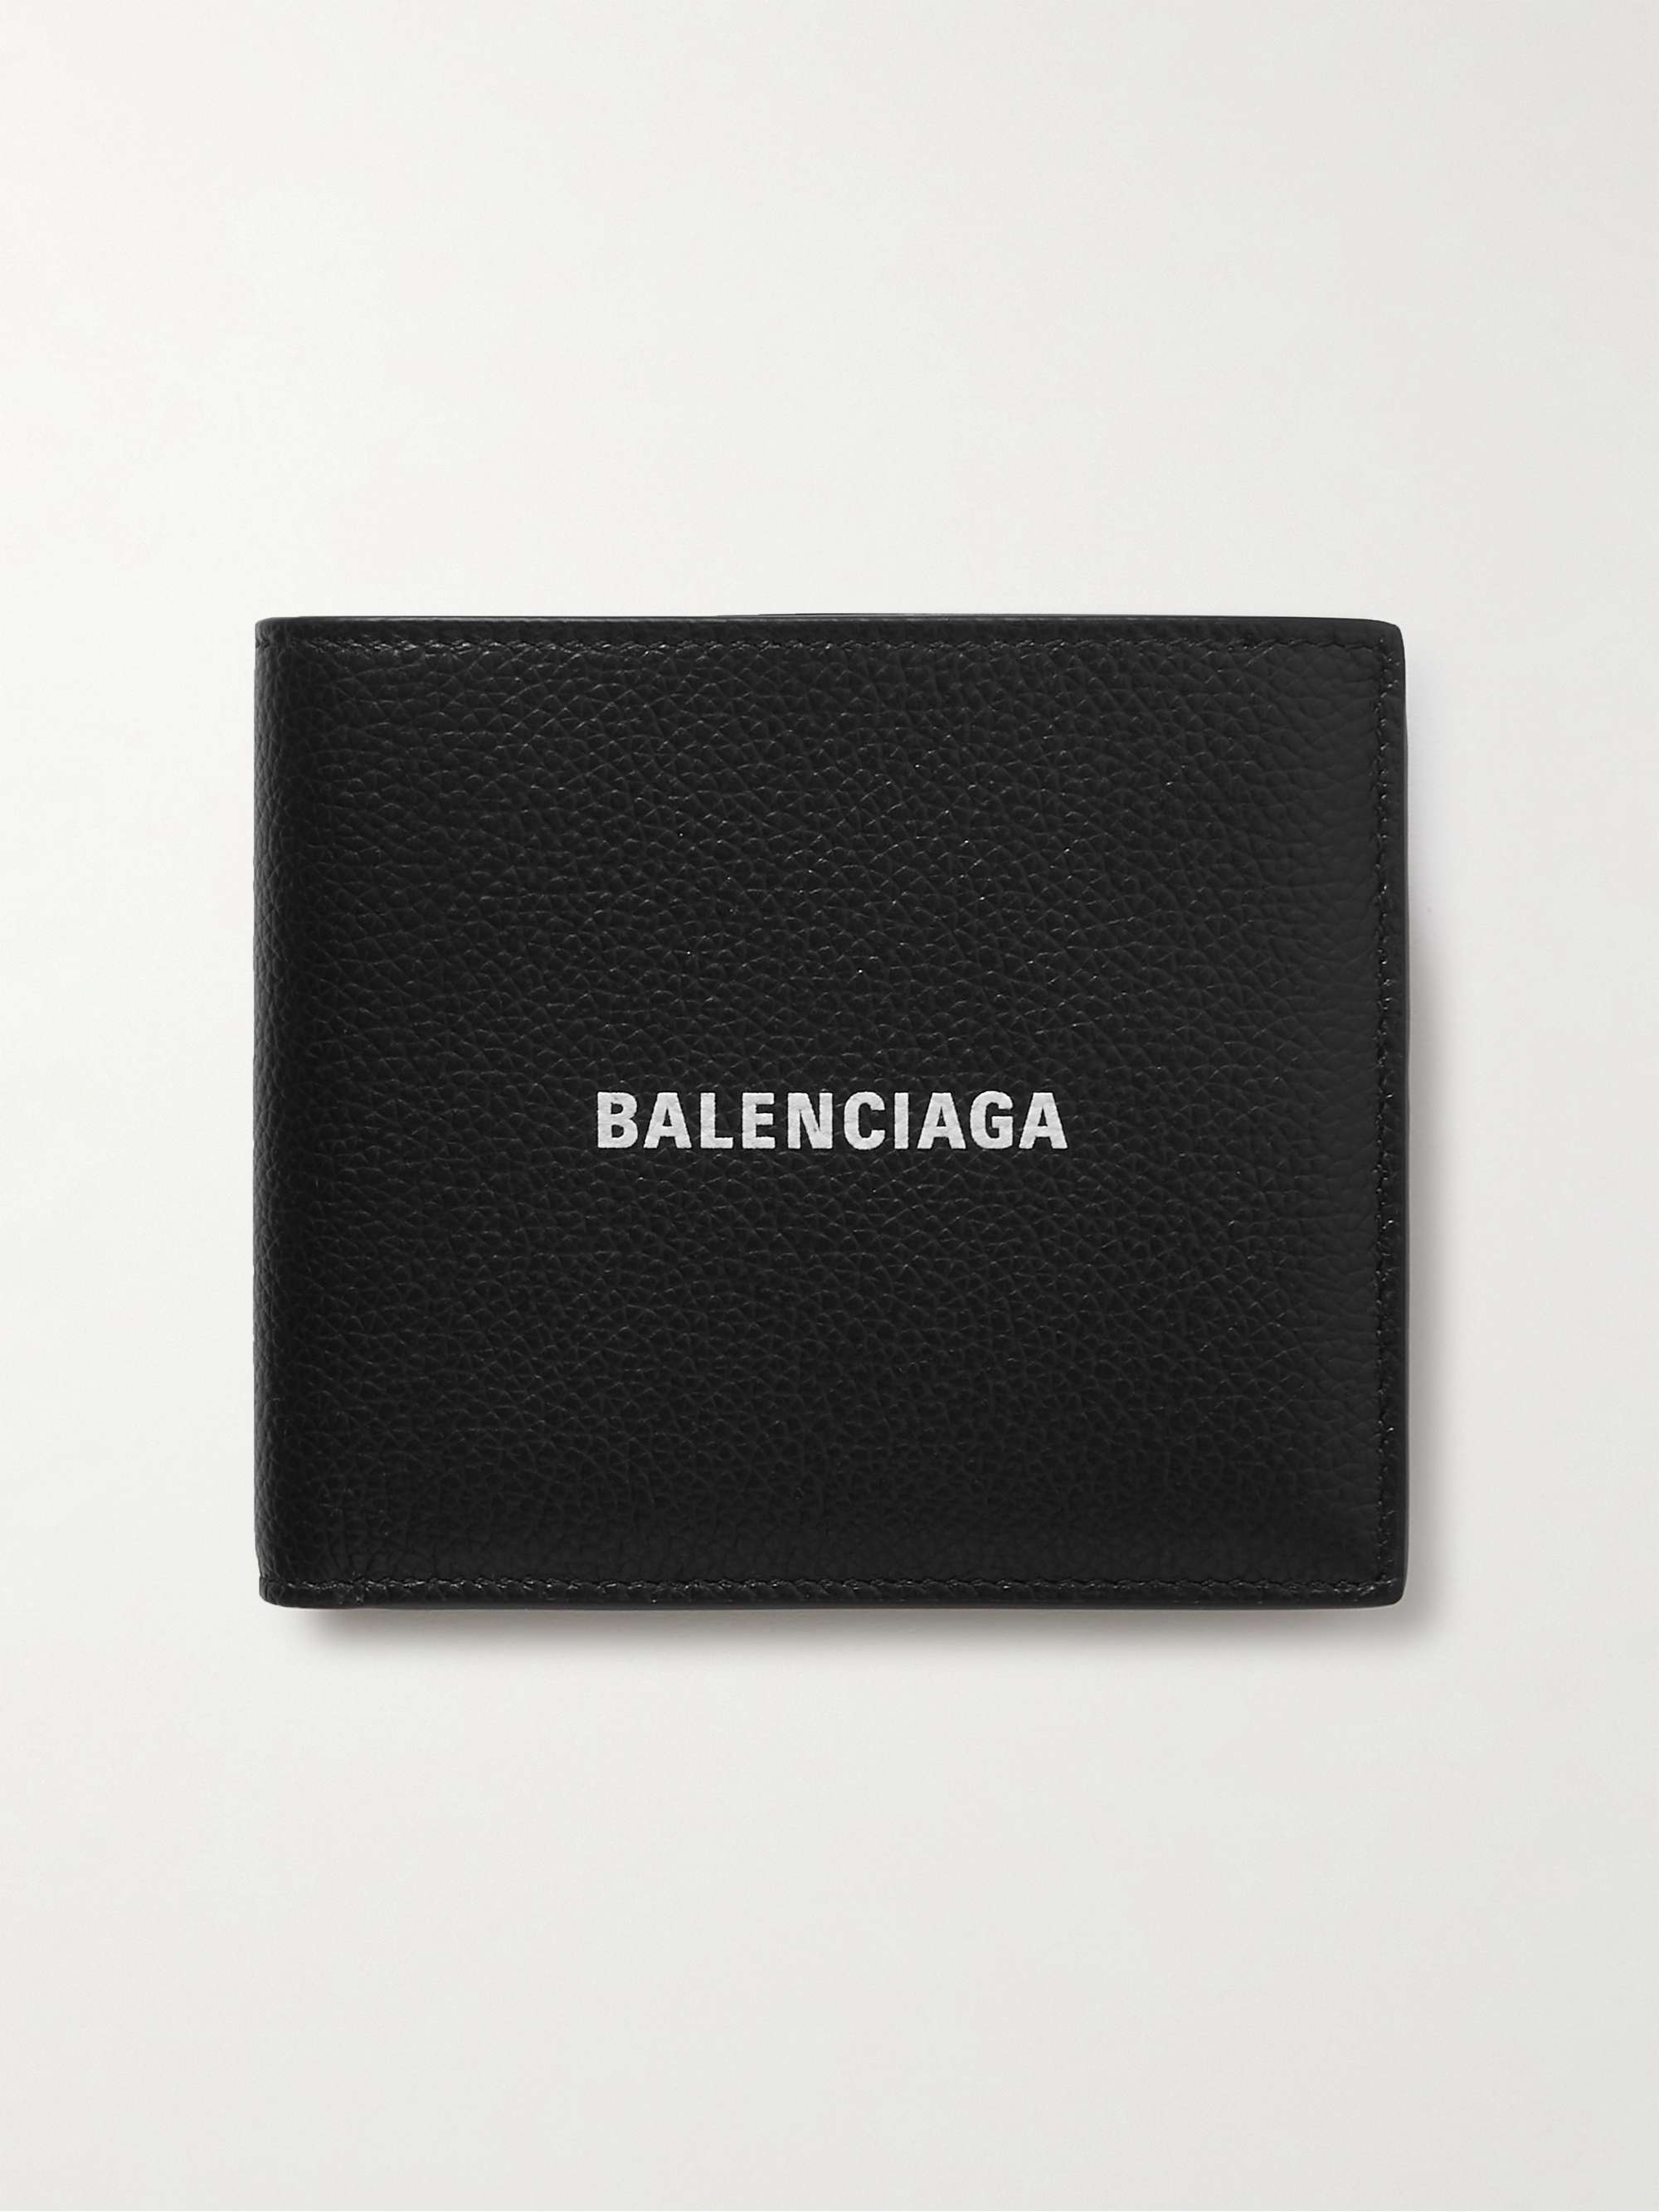 søsyge Merchandising diktator BALENCIAGA Logo-Print Full-Grain Leather Billfold Wallet | MR PORTER